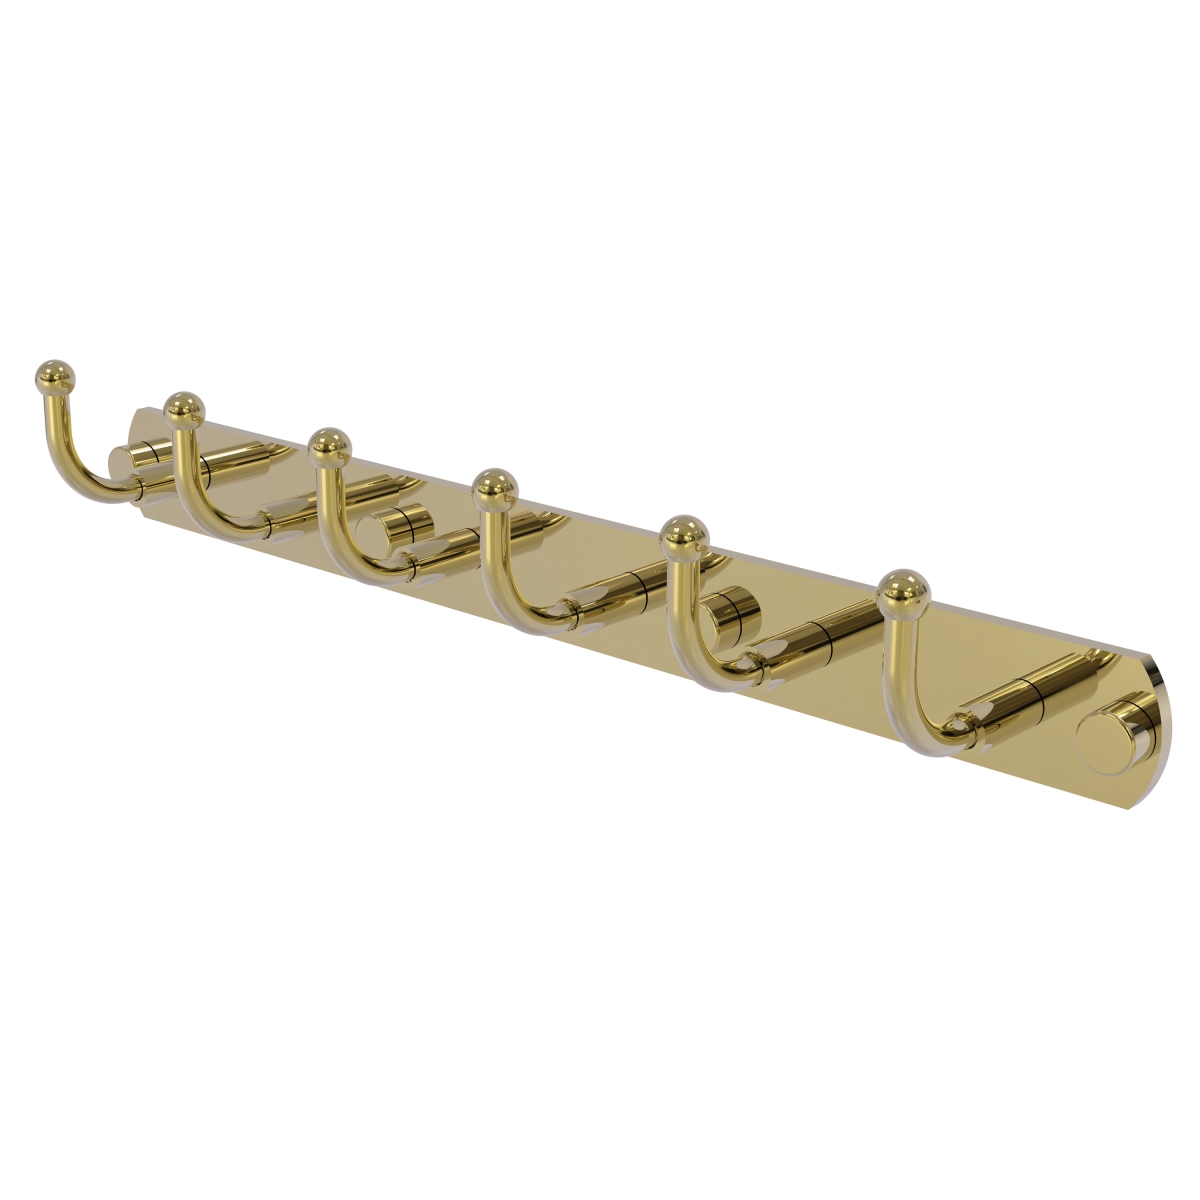 Picture of Allied Brass 1020-6-UNL Skyline Collection 6 Position Tie & Belt Rack, Unlacquered Brass